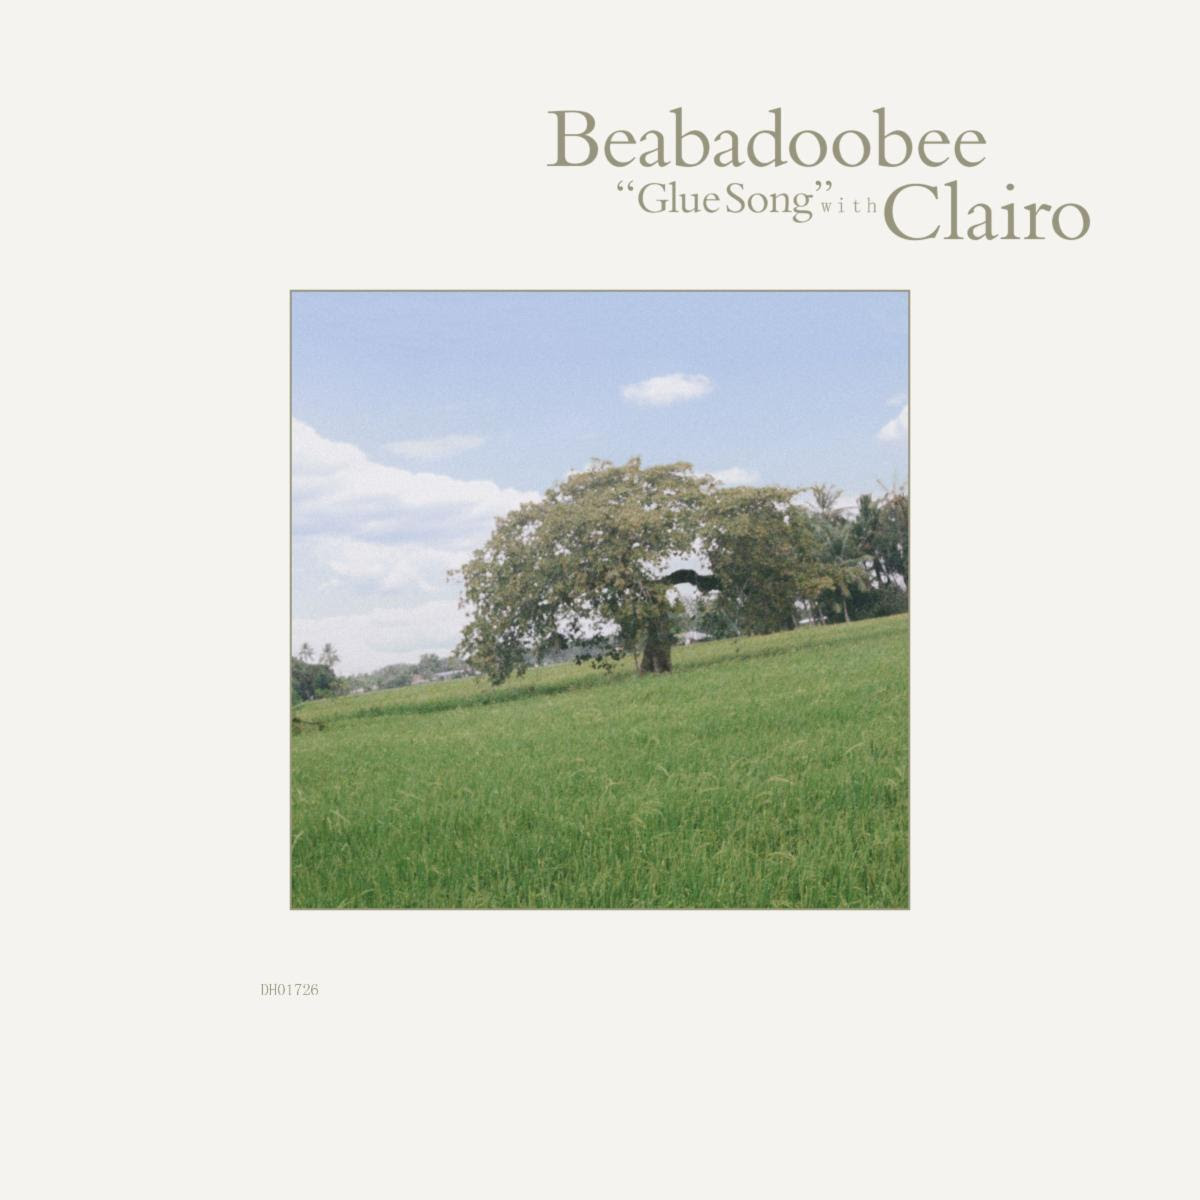 beabadoobee `Glue Song (feat. Clairo)` single art courtesy of Press Here Publicity